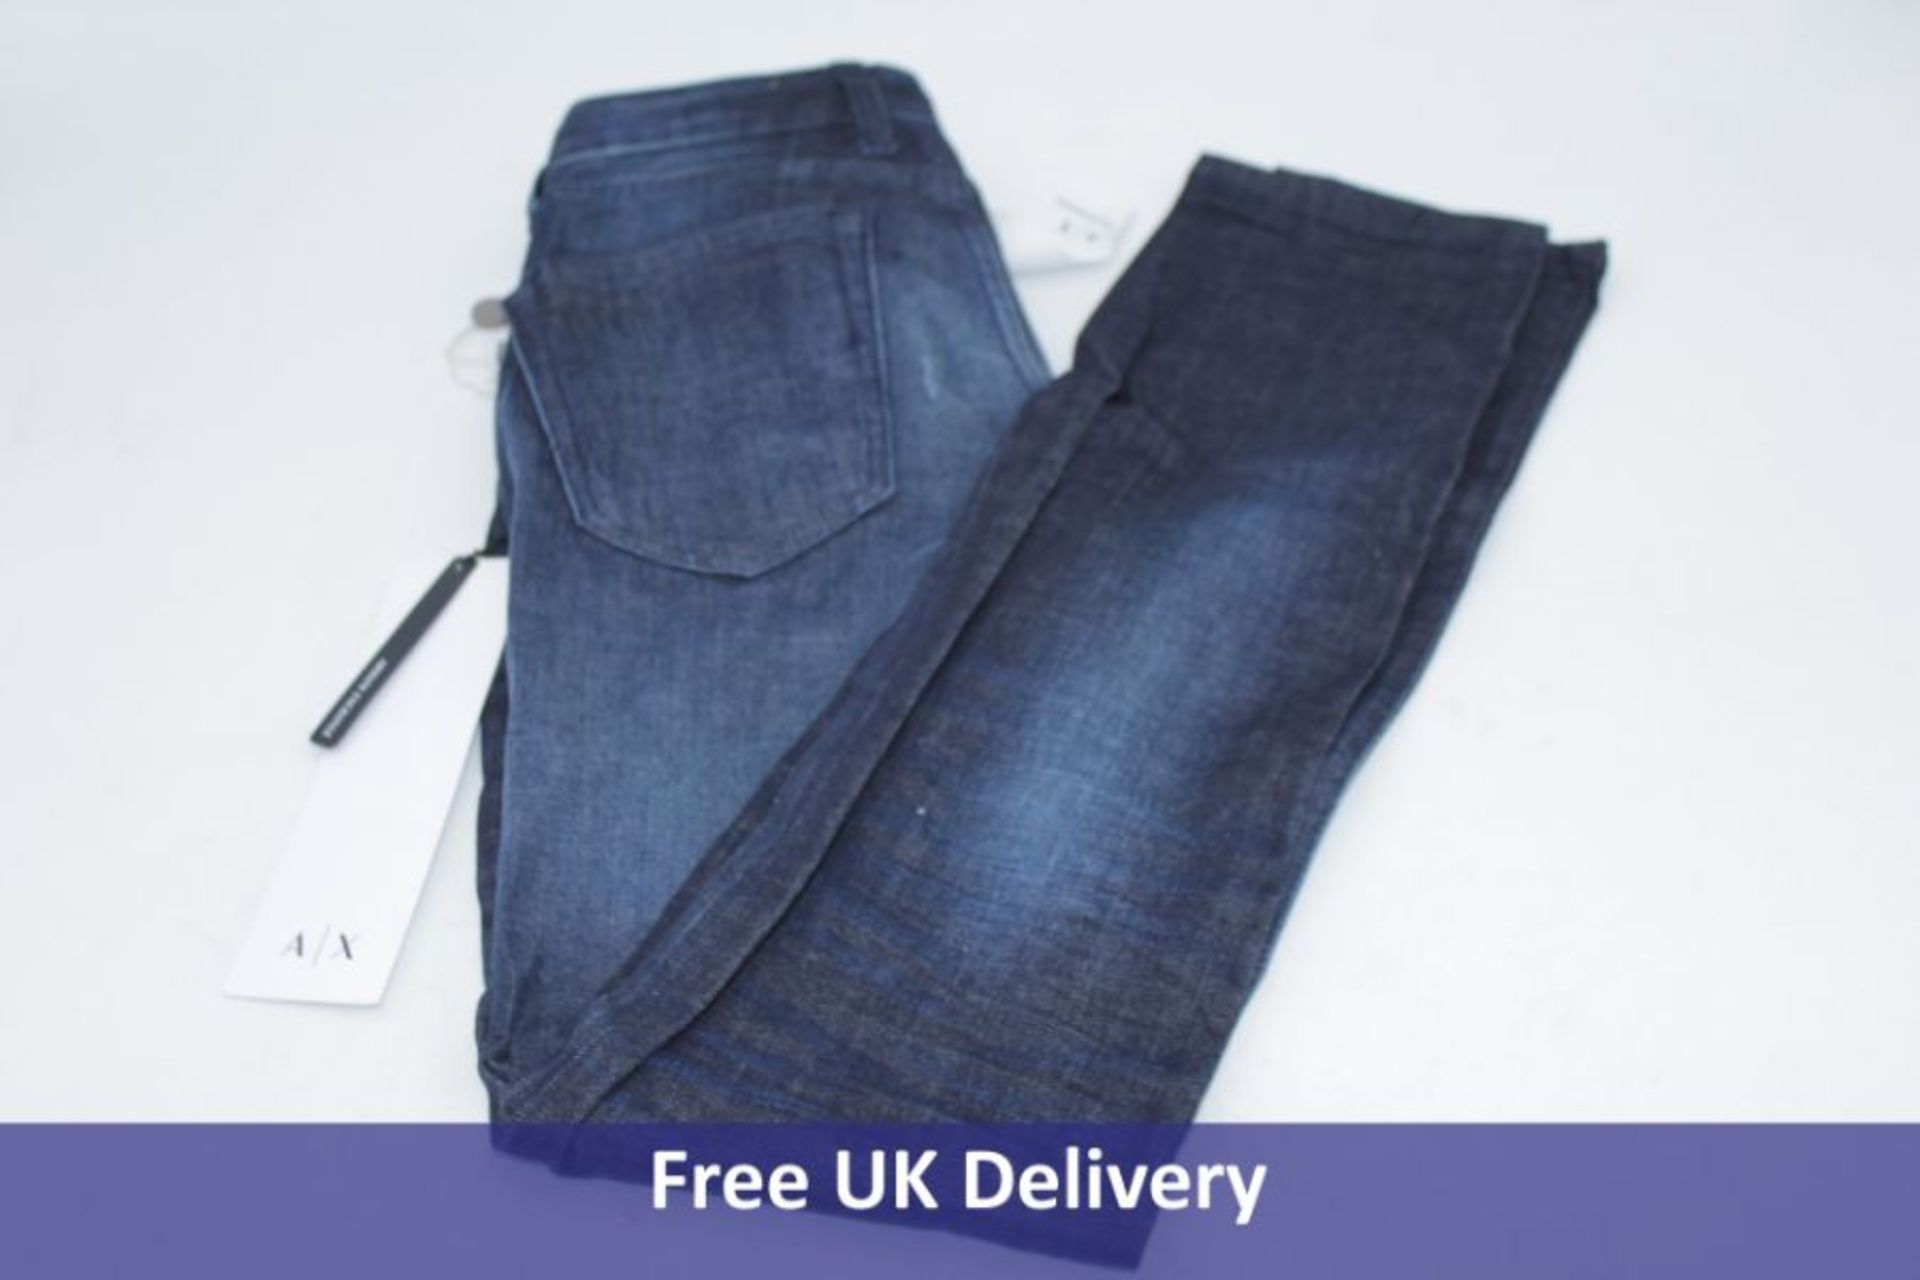 Two Armani Exchange Men's Tapered Fit Jeans, Indigo, 1x 28W 32L, 1x 29W 32L